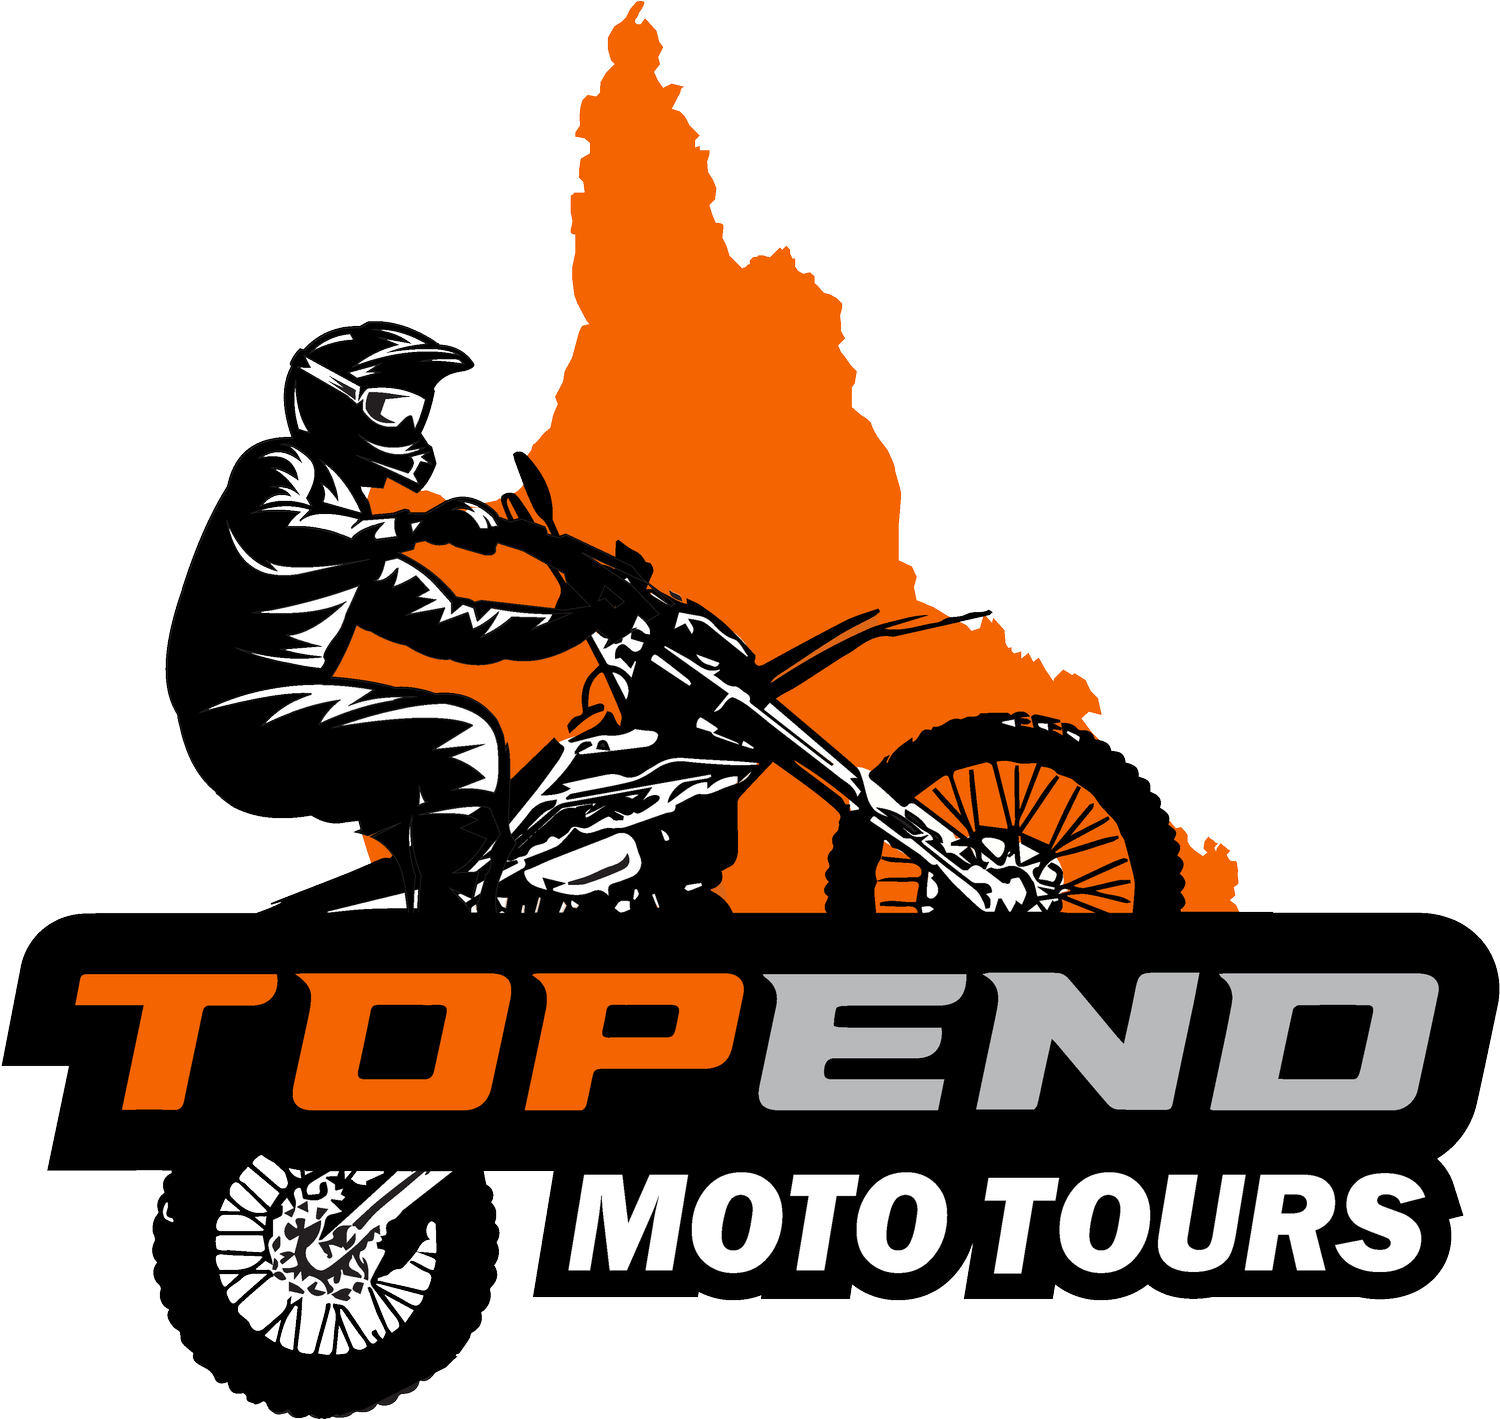 Cape York Motorcycle Tour